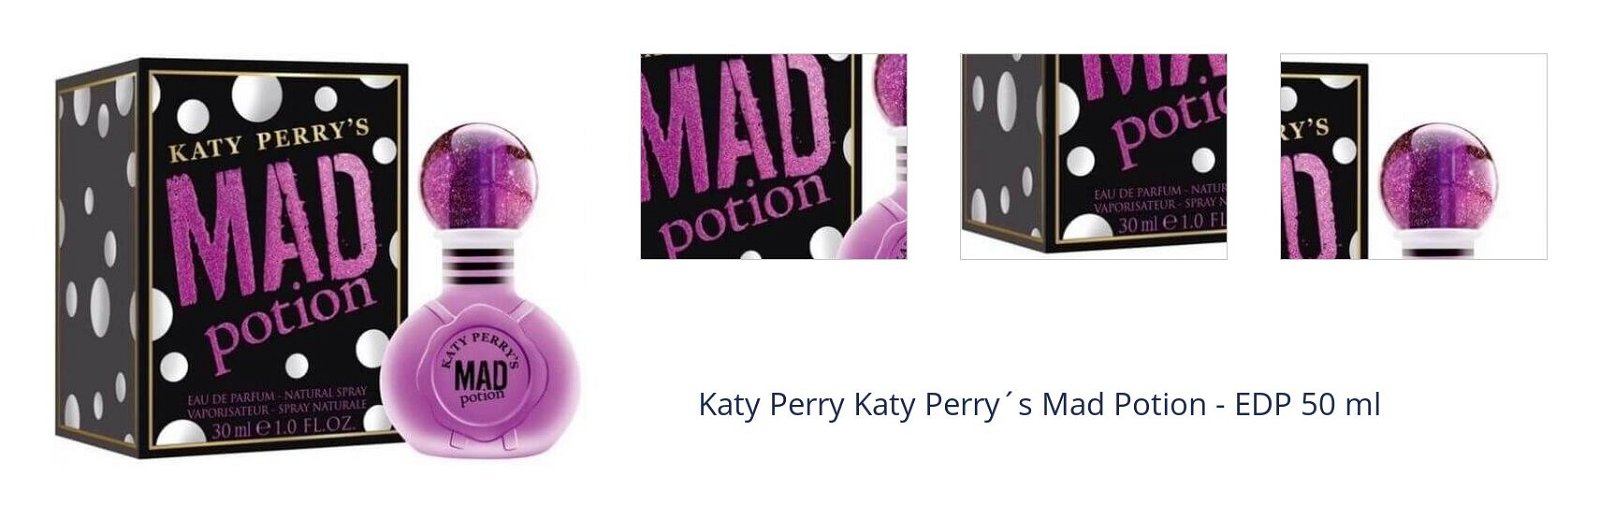 Katy Perry Katy Perry´s Mad Potion - EDP 50 ml 1